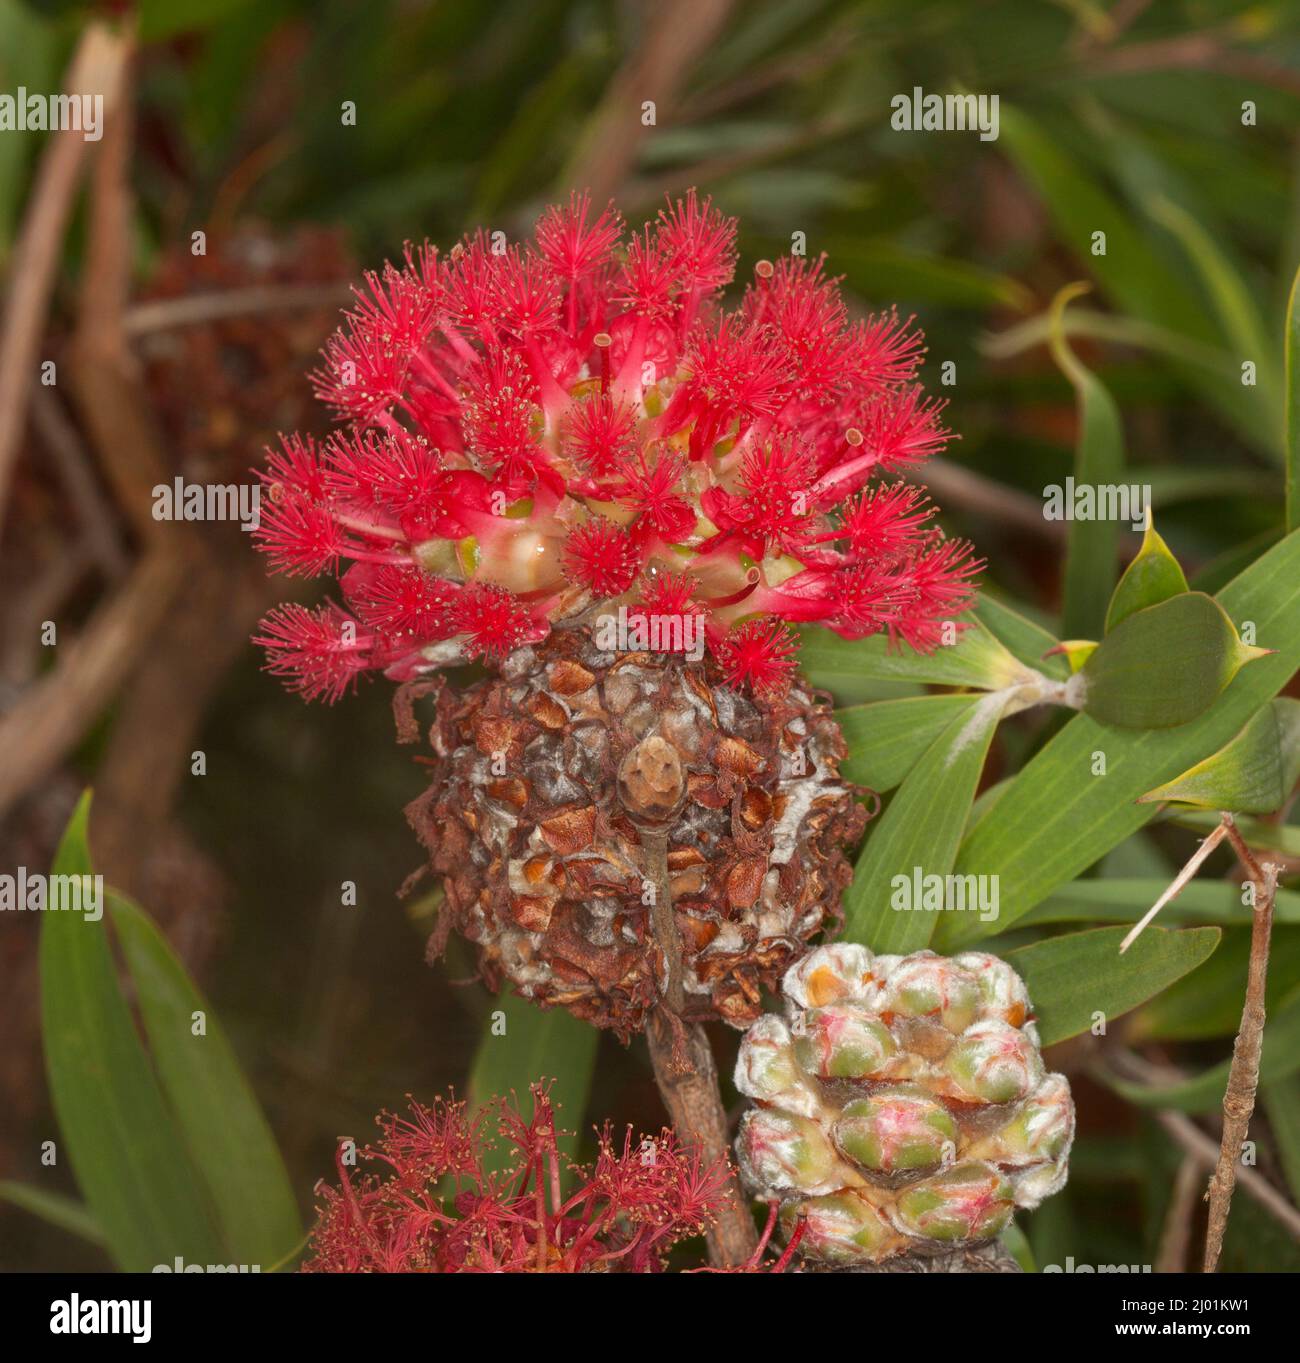 Unusual vivid red flower of Asteromyrtus brassii ‘Fireball', an Australian native shrub, against background of green foliage Stock Photo